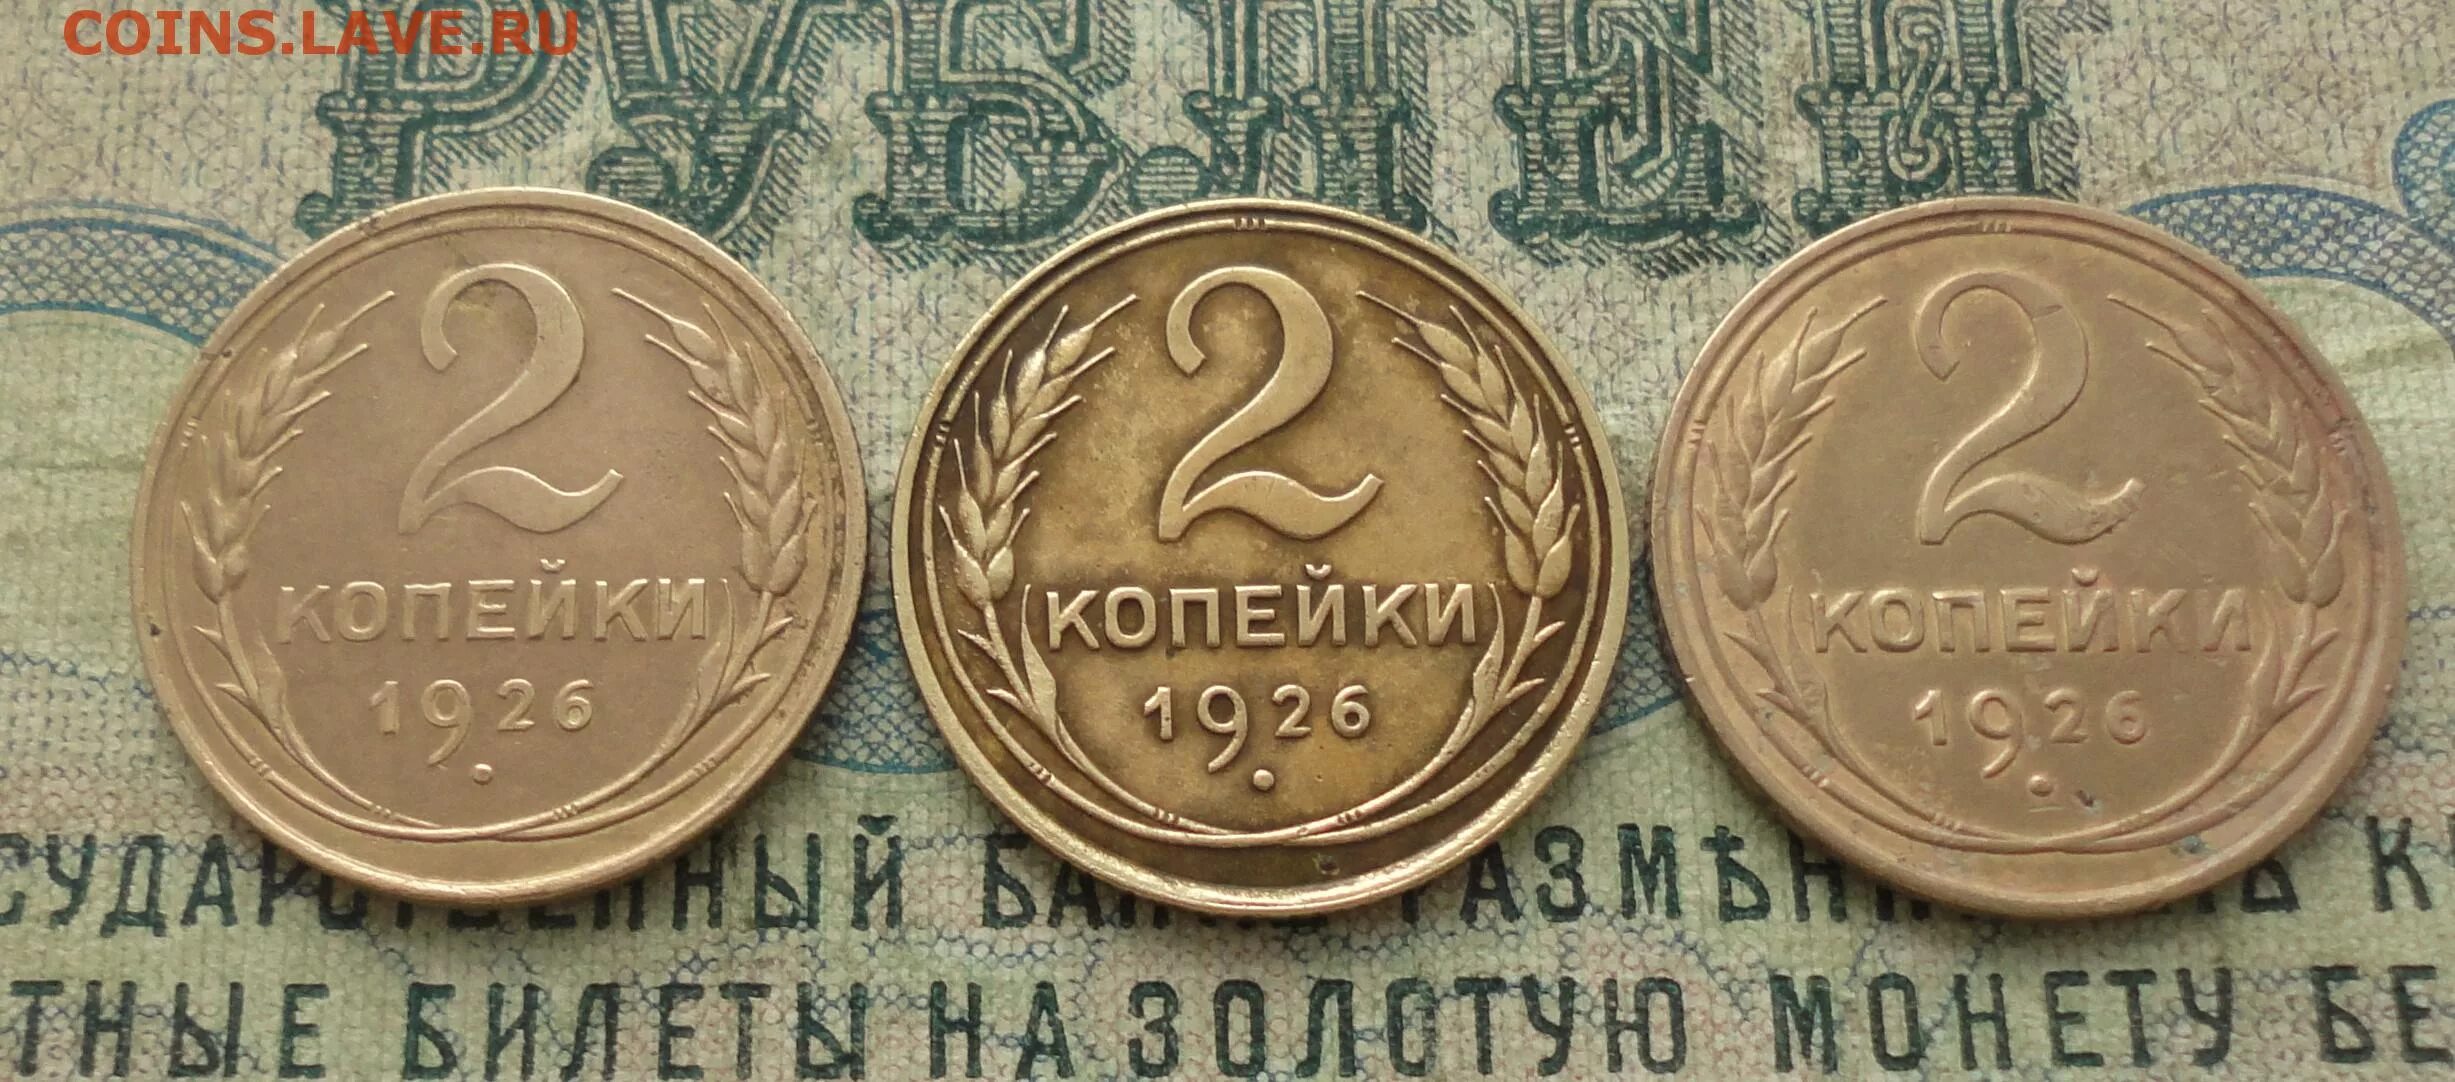 3 монеты ру